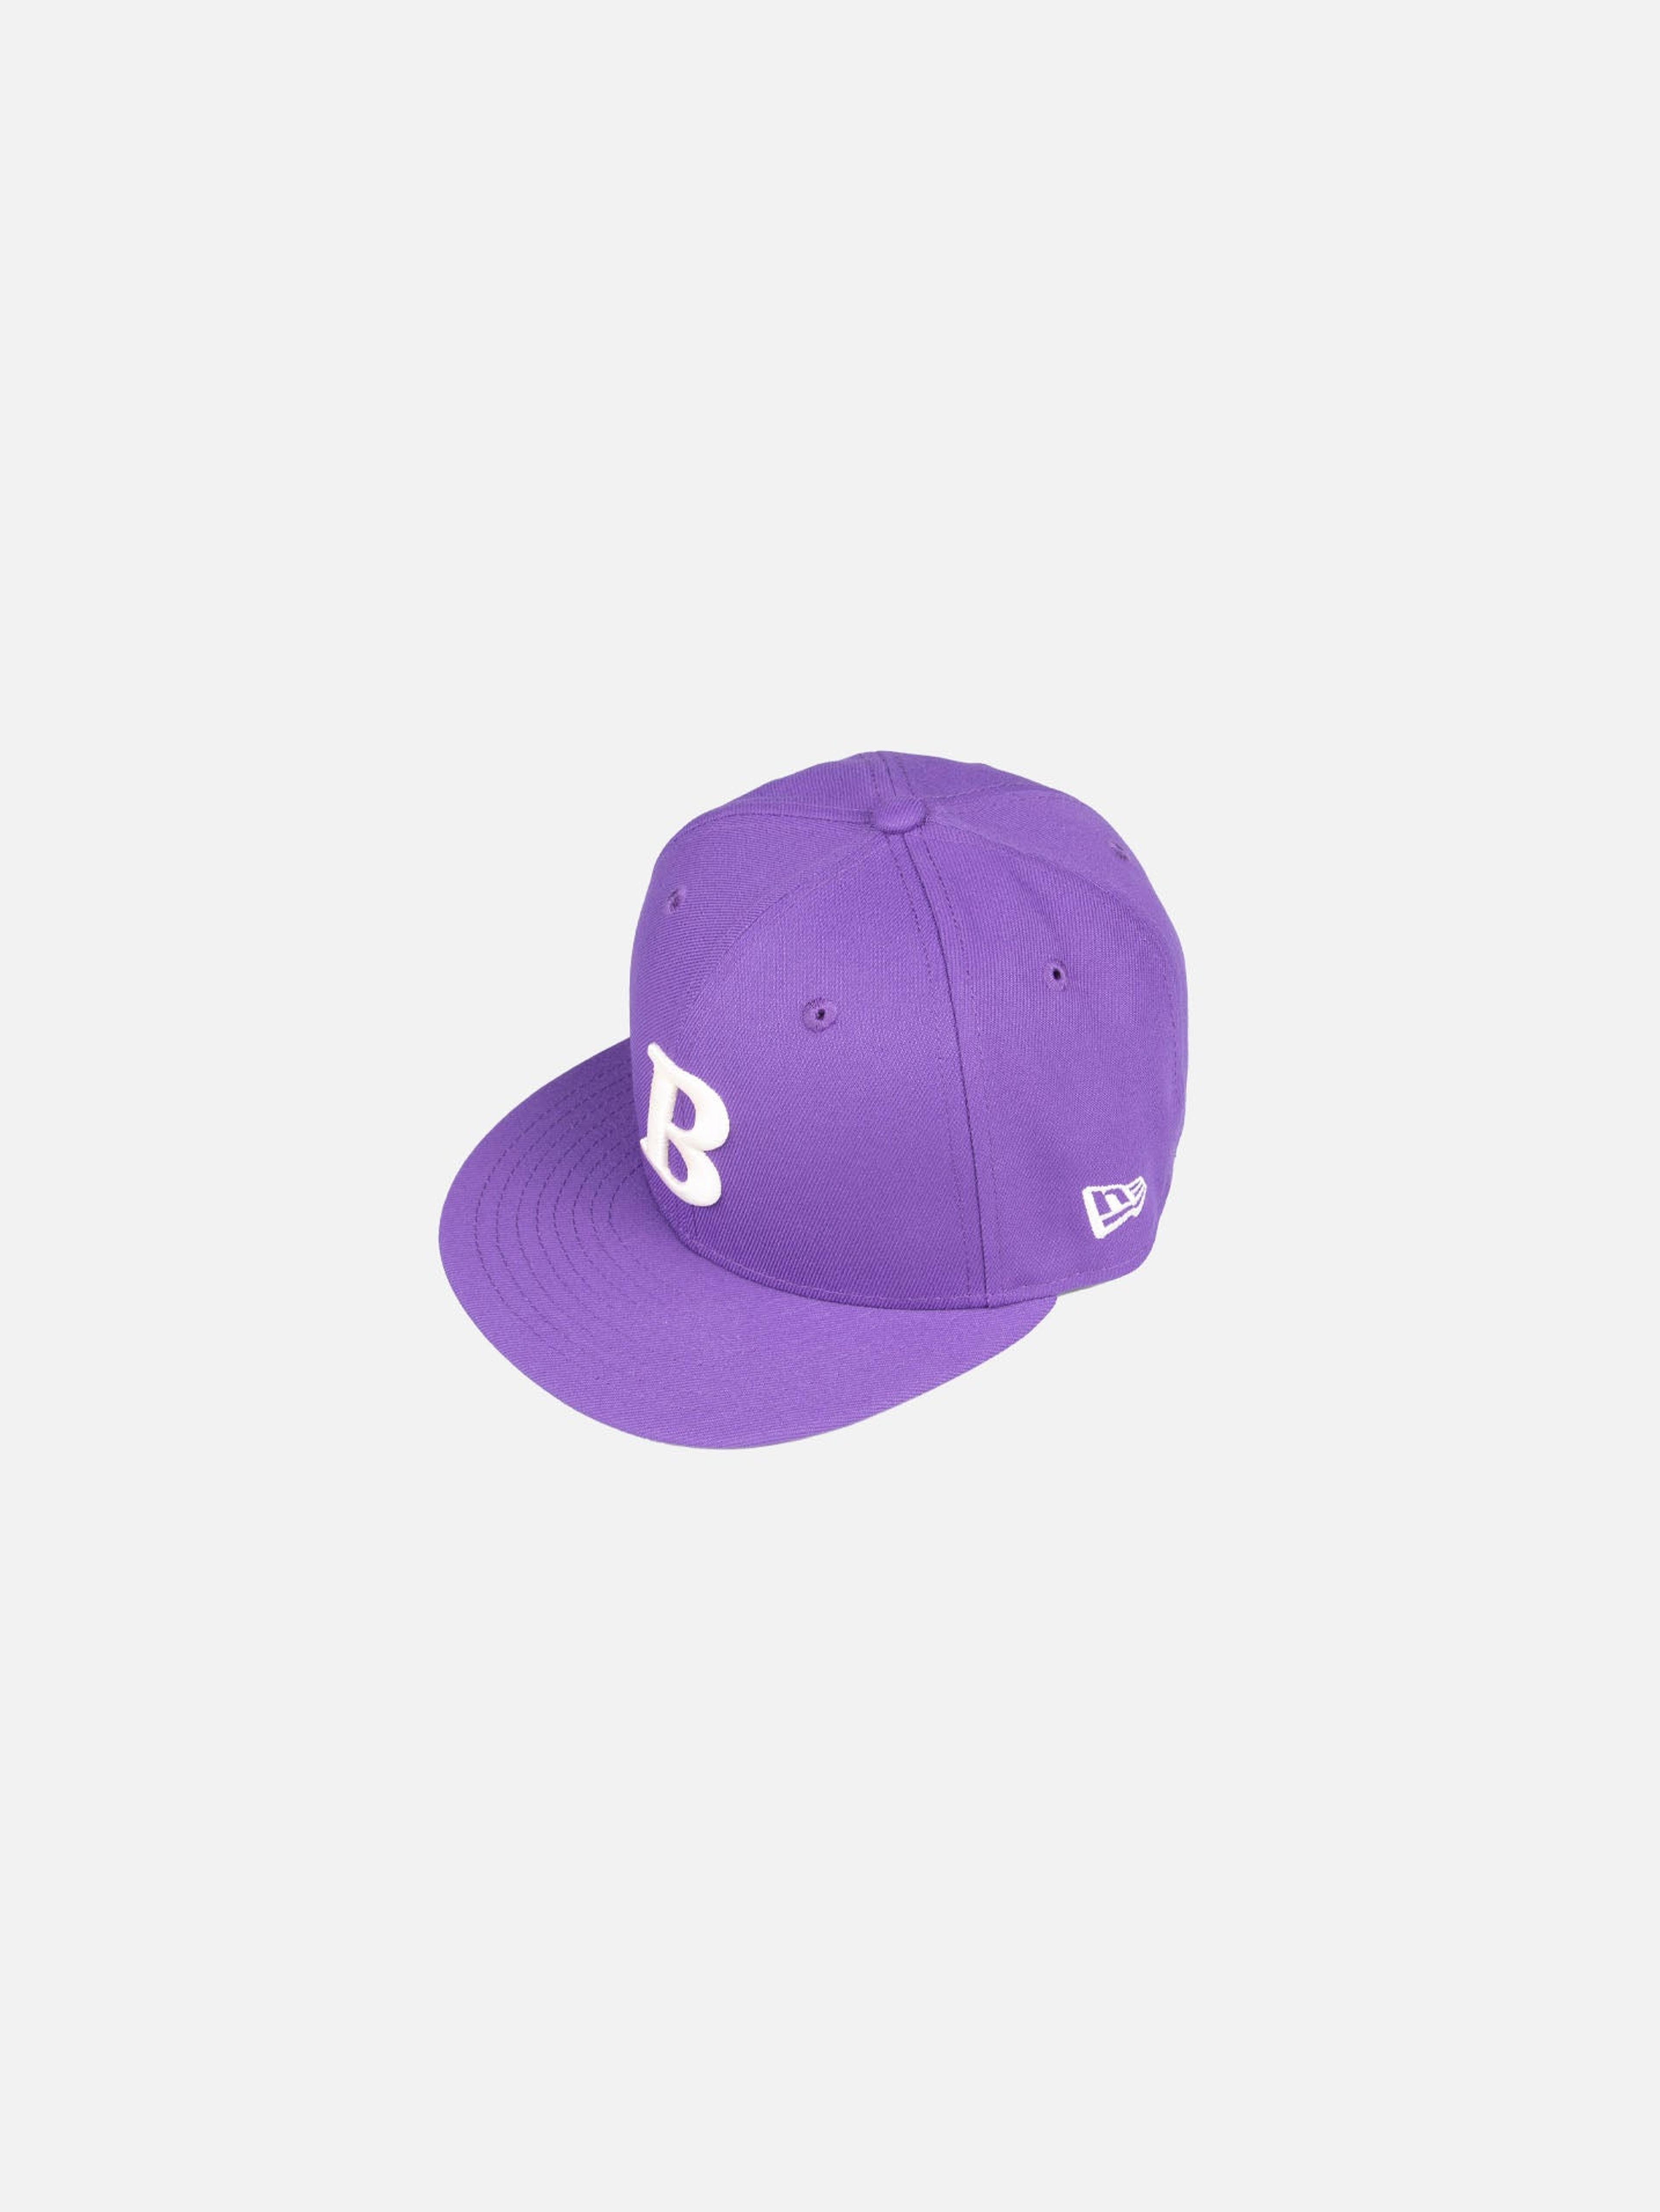 Alternate View 2 of New Era B Logo Cap - Screwed Purple